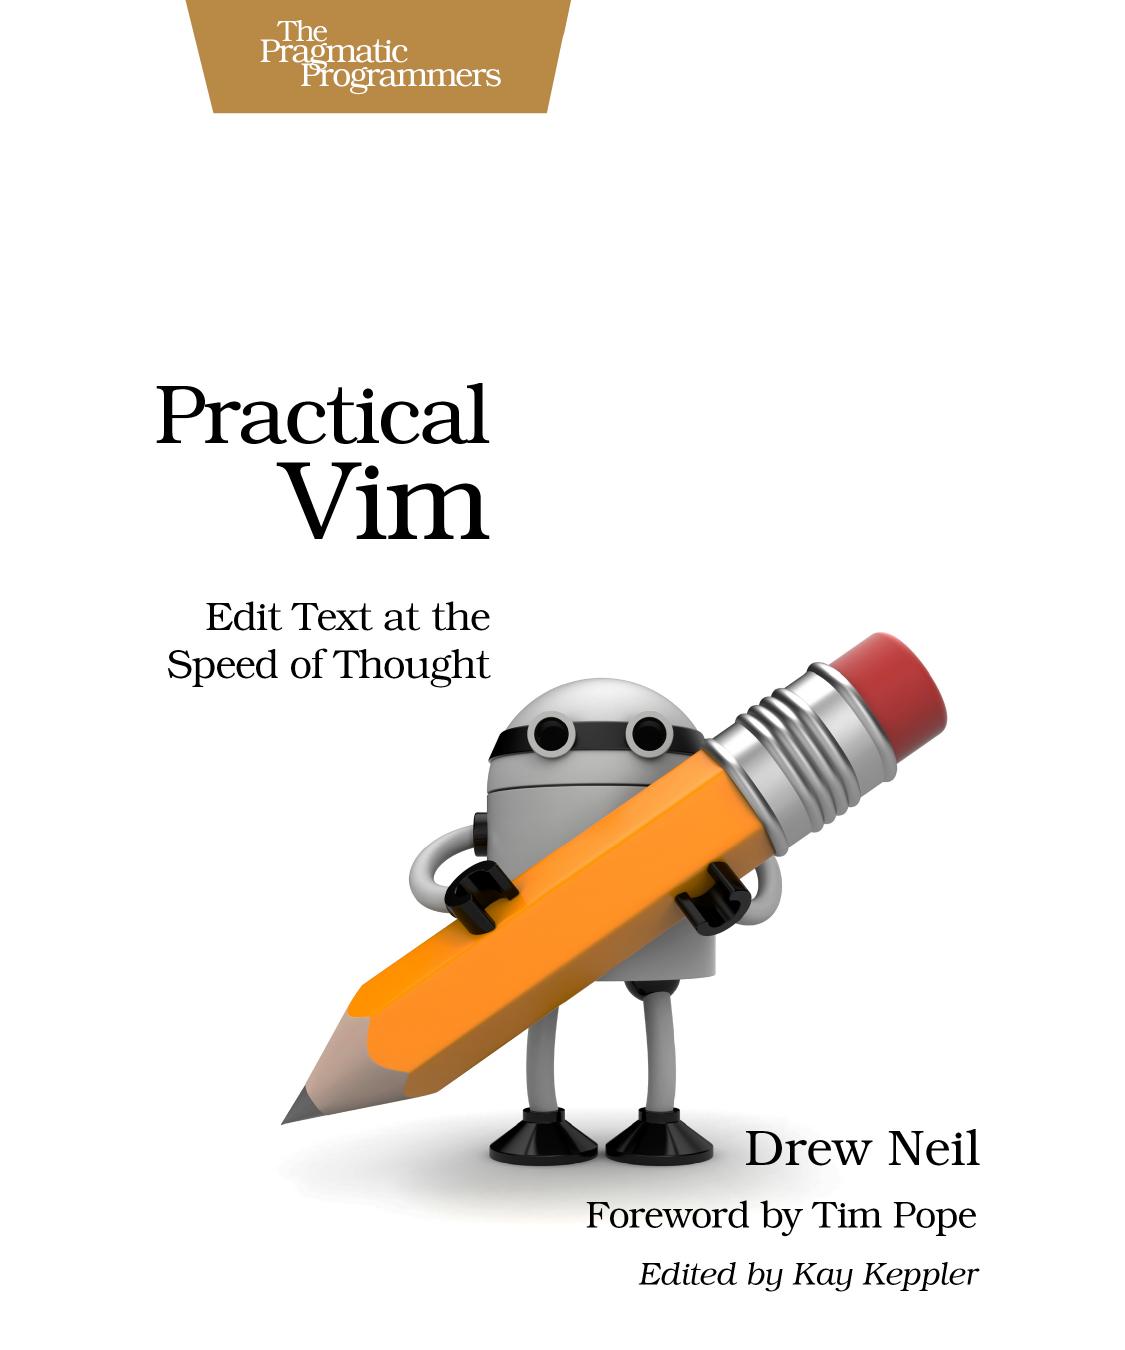 Practical Vim by Drew Neil